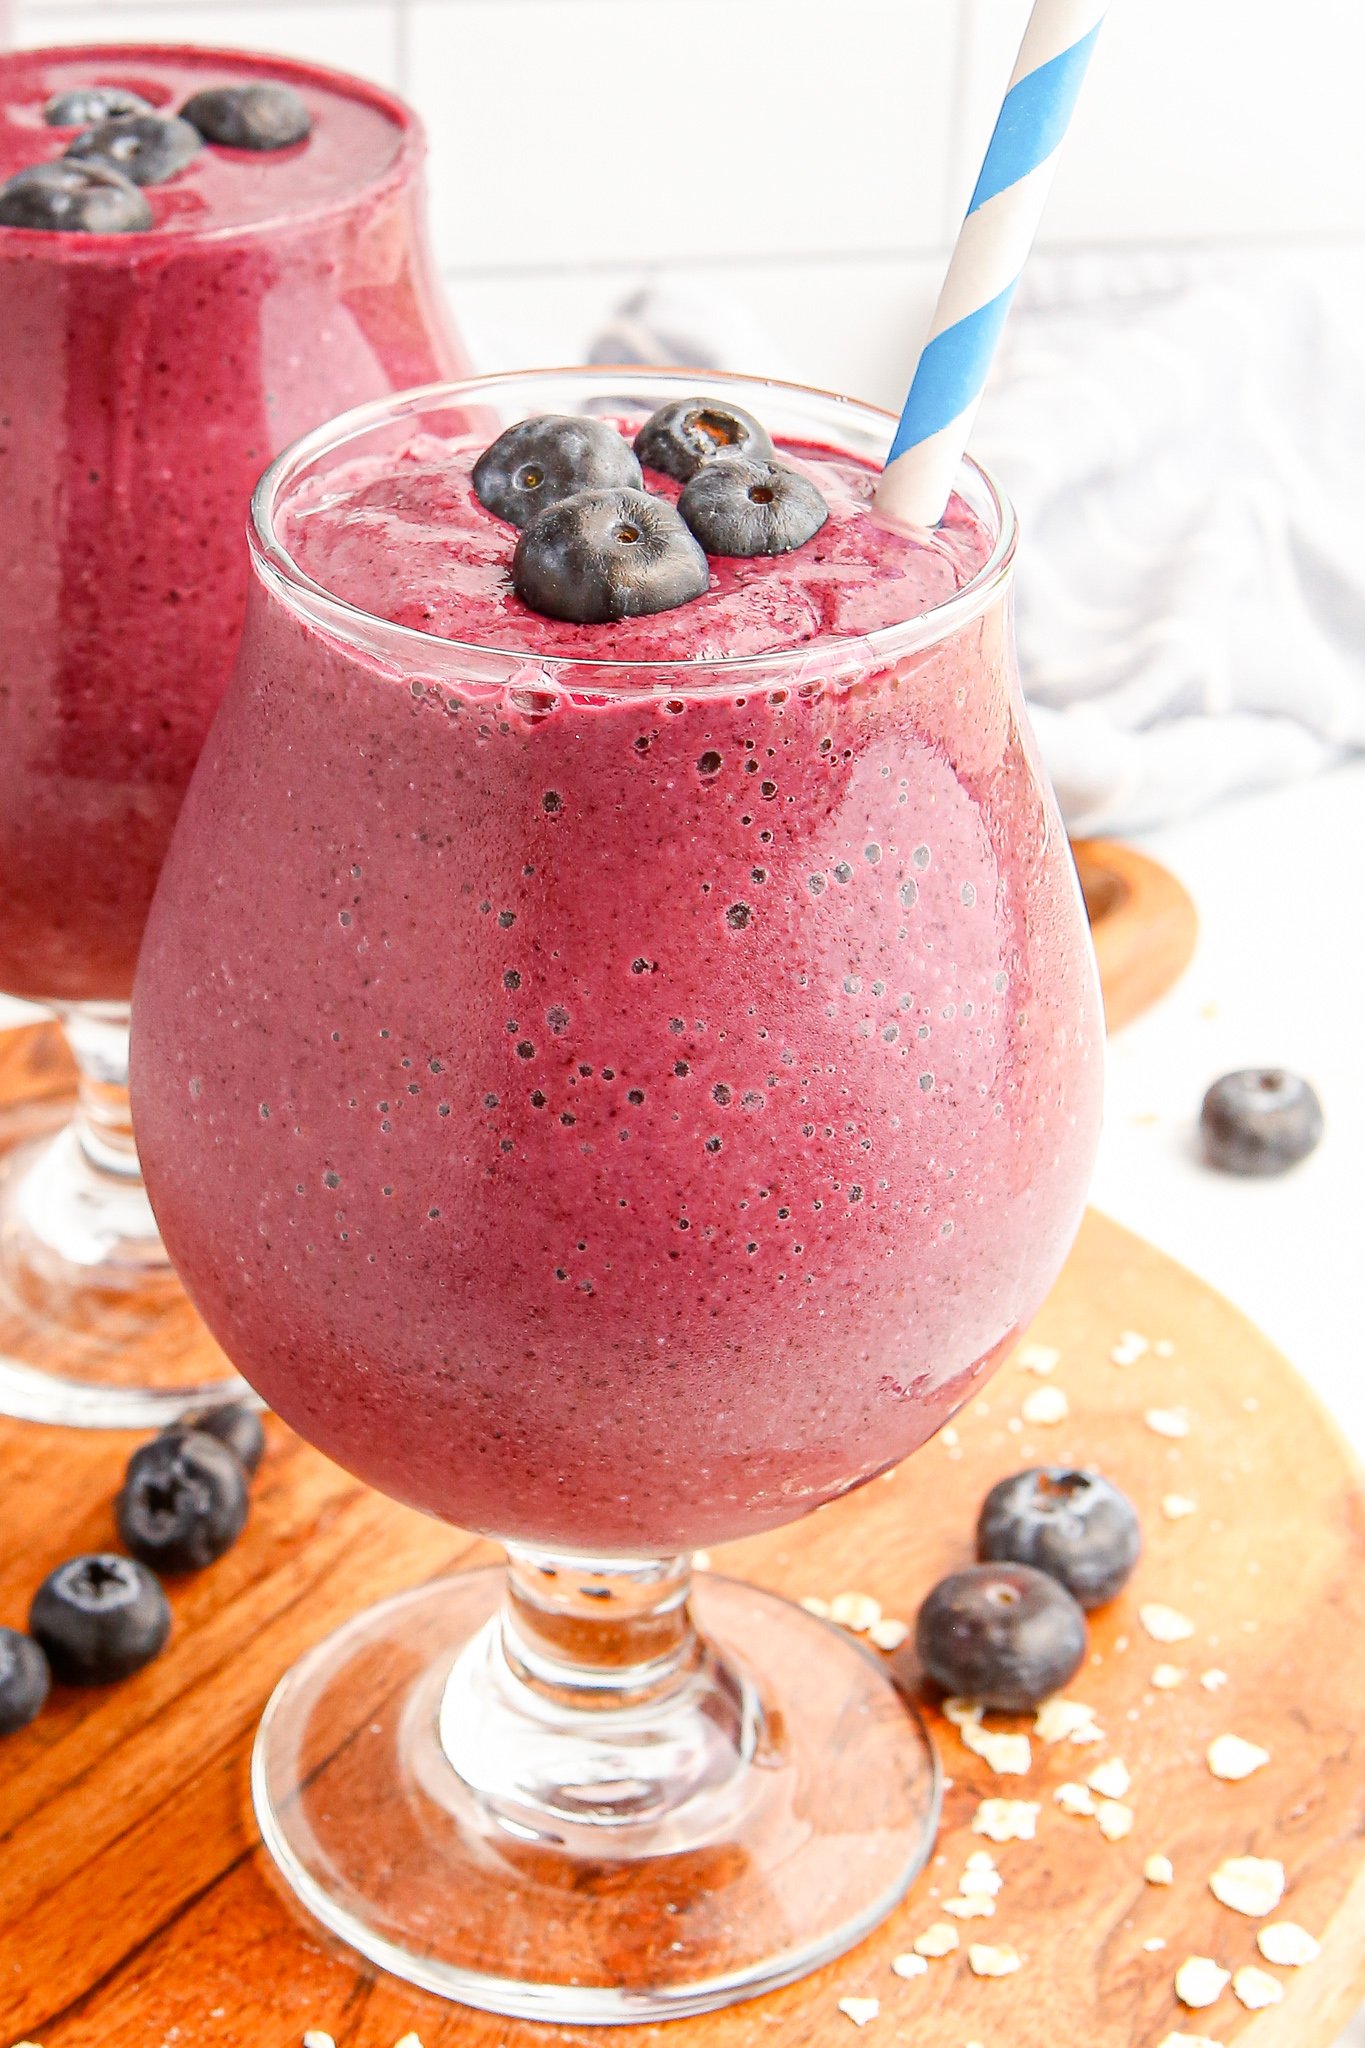 Blueberry Smoothie recipe - The Recipe Rebel